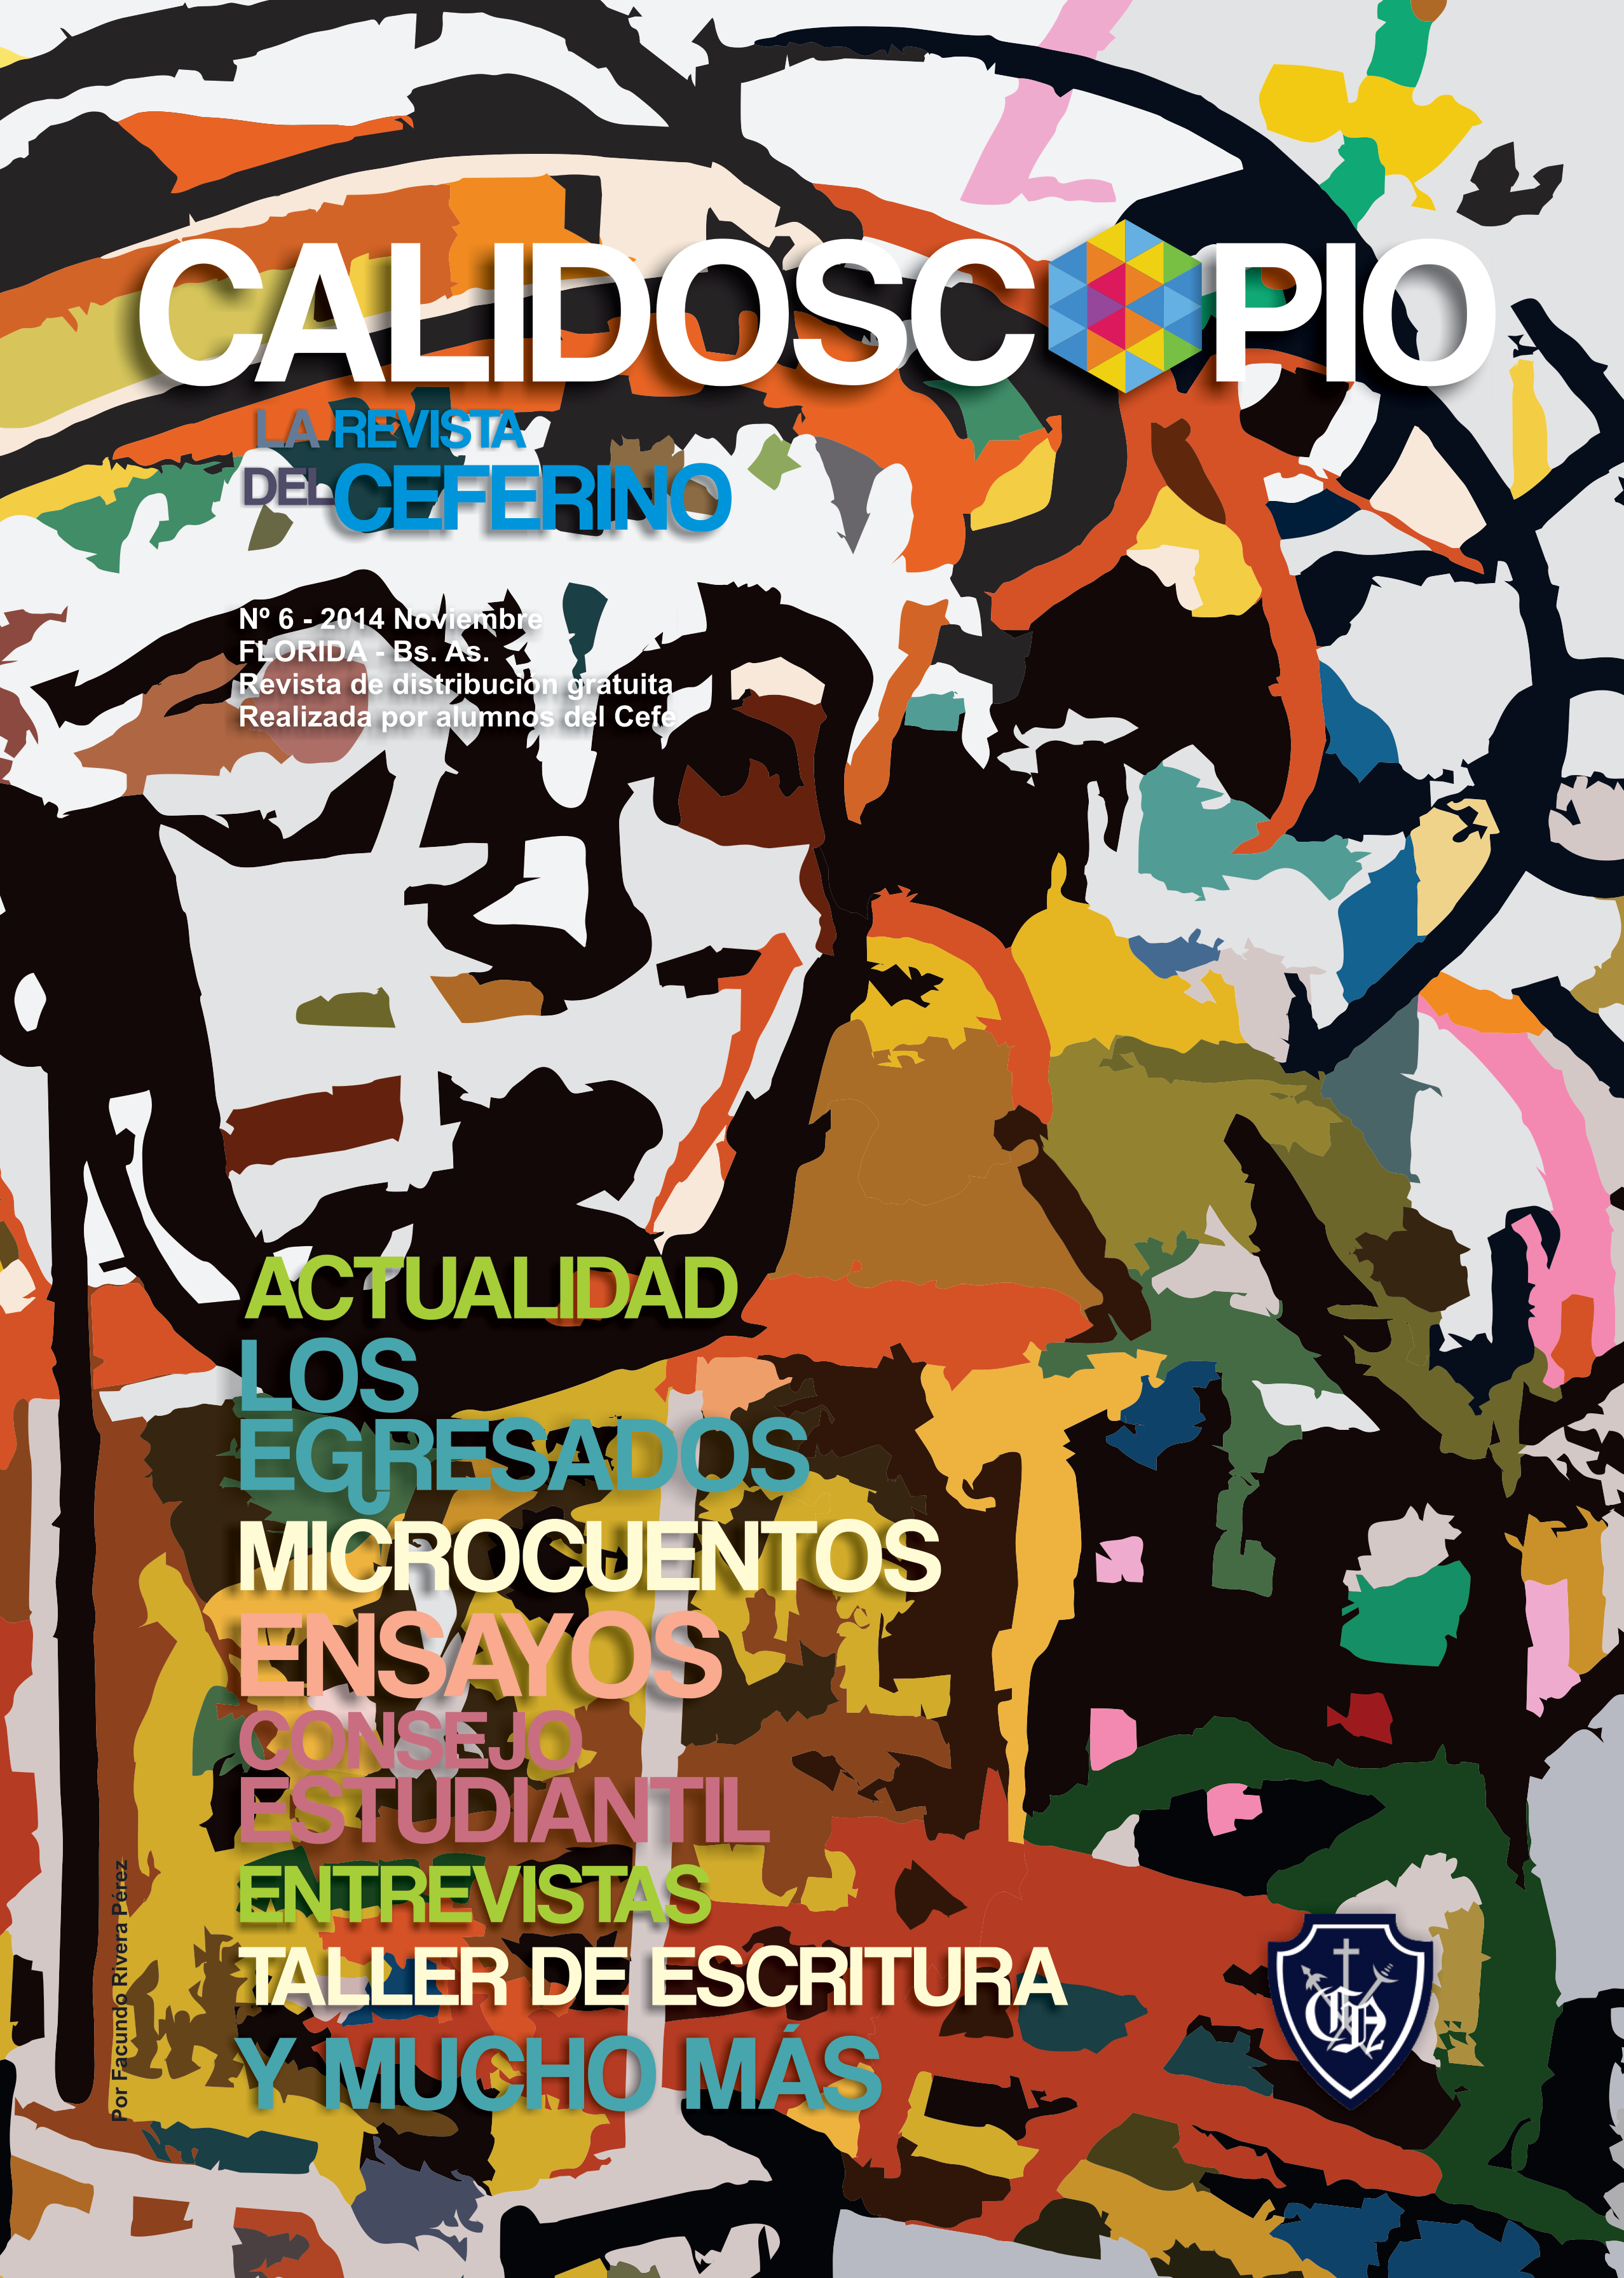 Calidoscopio 2014 - Revista Digital